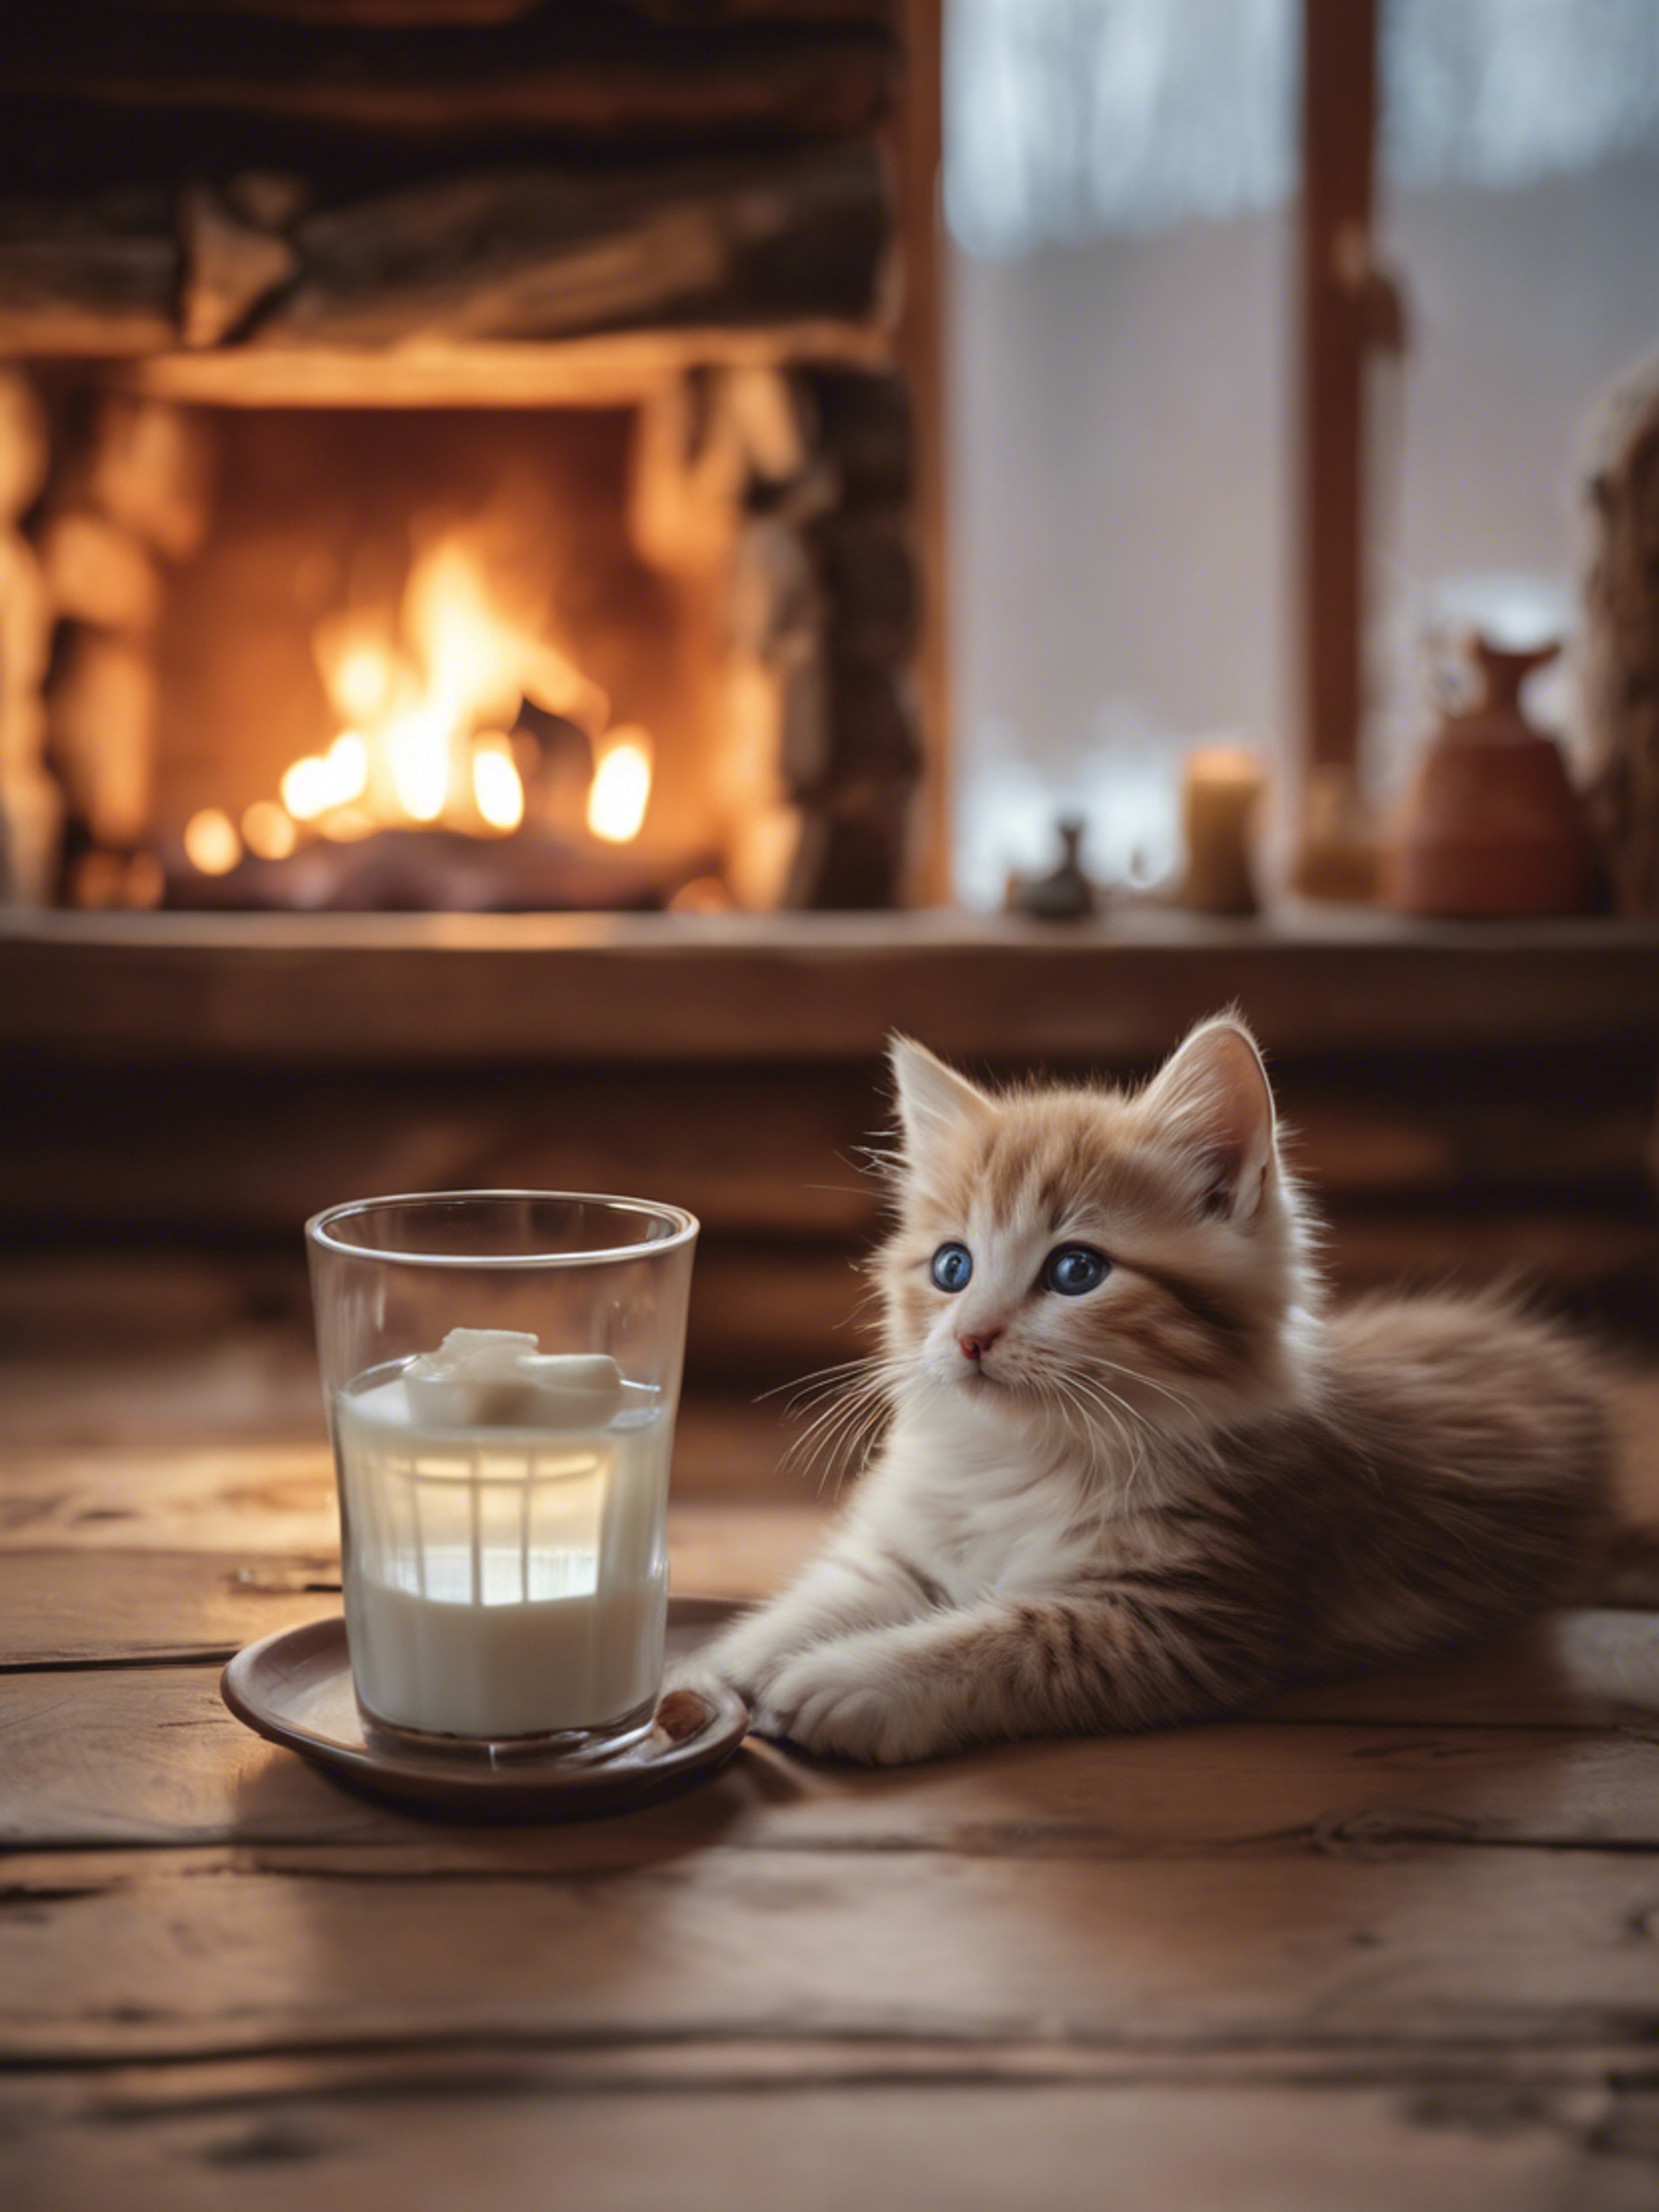 A screenshot showing a cheerful ragamuffin kitten enjoying a glass of milk beside a warm fireplace in a cozy log cabin.壁紙[8076d17b25644be2a368]